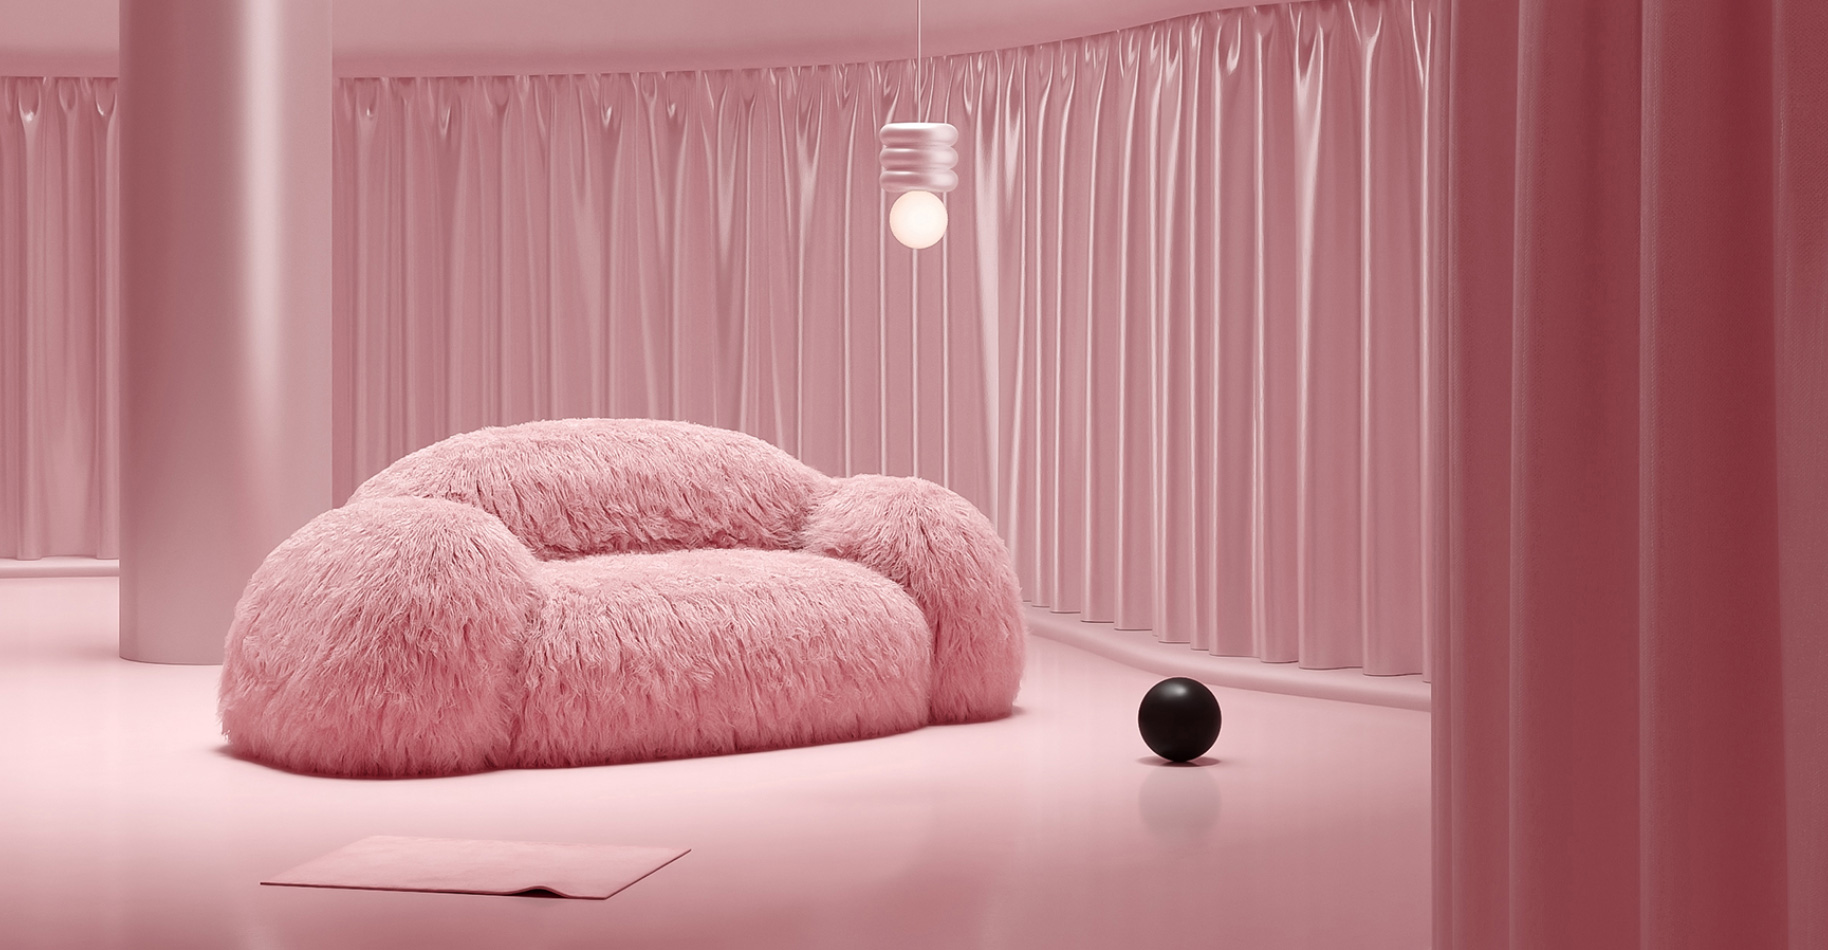 vladimir naumov designs dreamy pink "yeti" sofa for MISSANA LAB